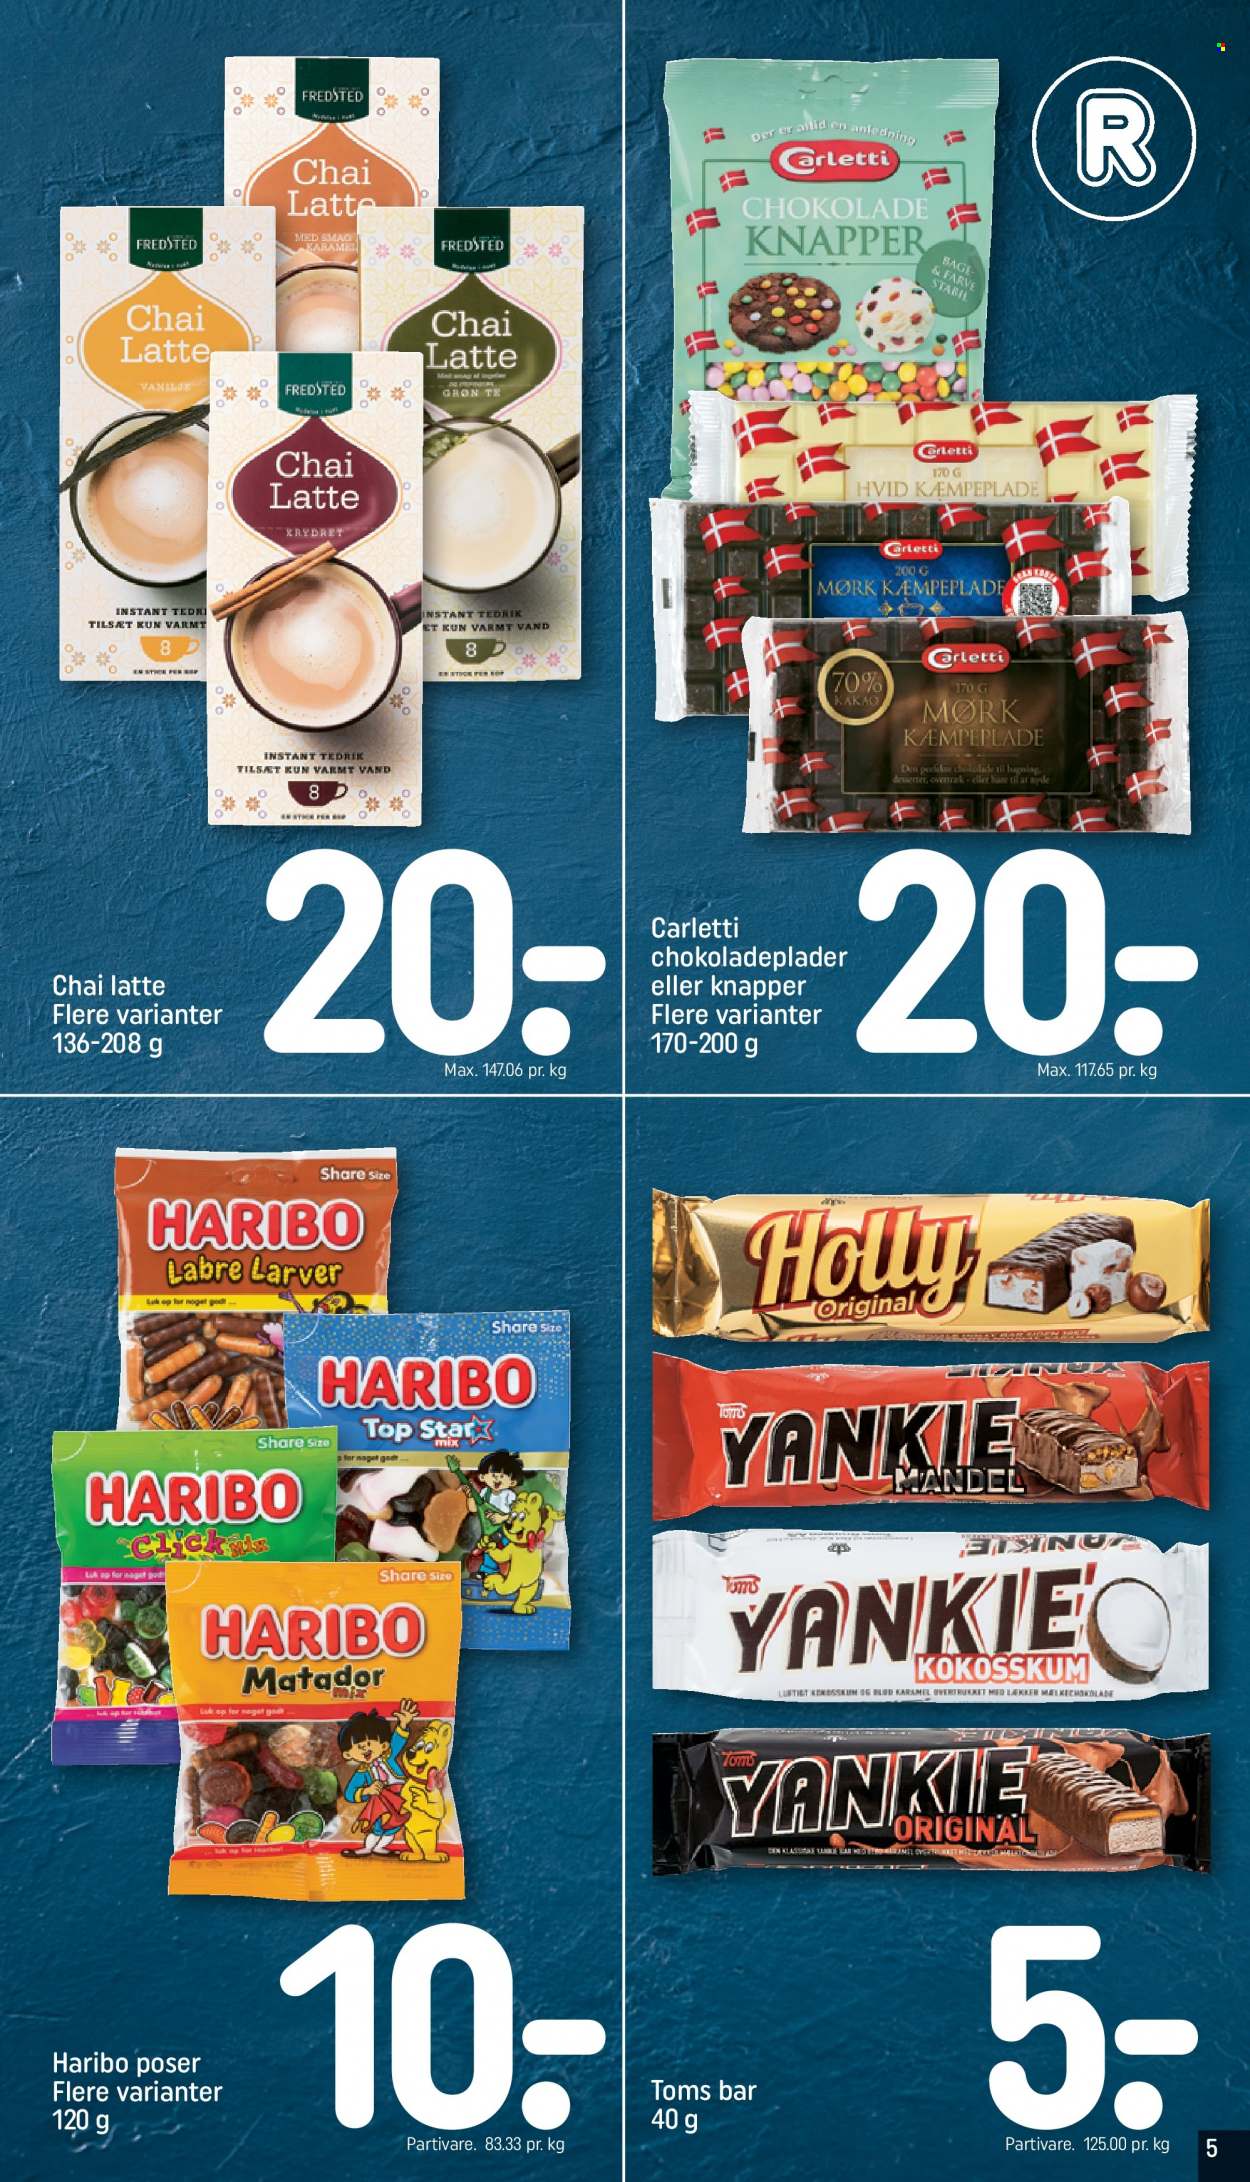 thumbnail - Rema 1000 tilbud  - 29.1.2023 - 4.2.2023 - tilbudsprodukter - chokolade, karamel, Toms, Haribo, Carletti, Fredsted, Chai. Side 5.